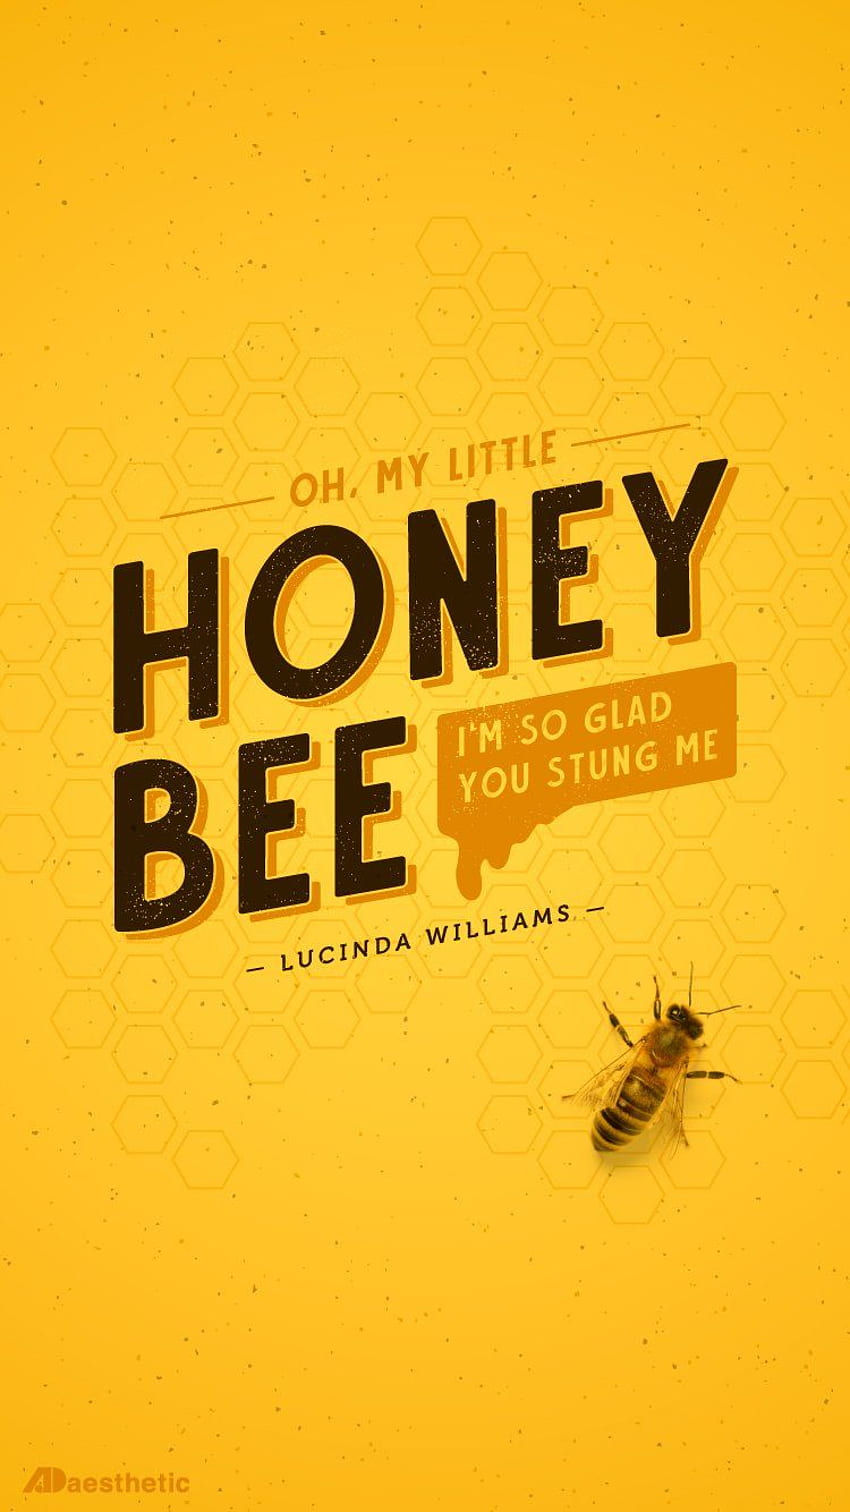 Oh, my little honey bee. I'm so glad you stung me. Lucinda Williams - Honey